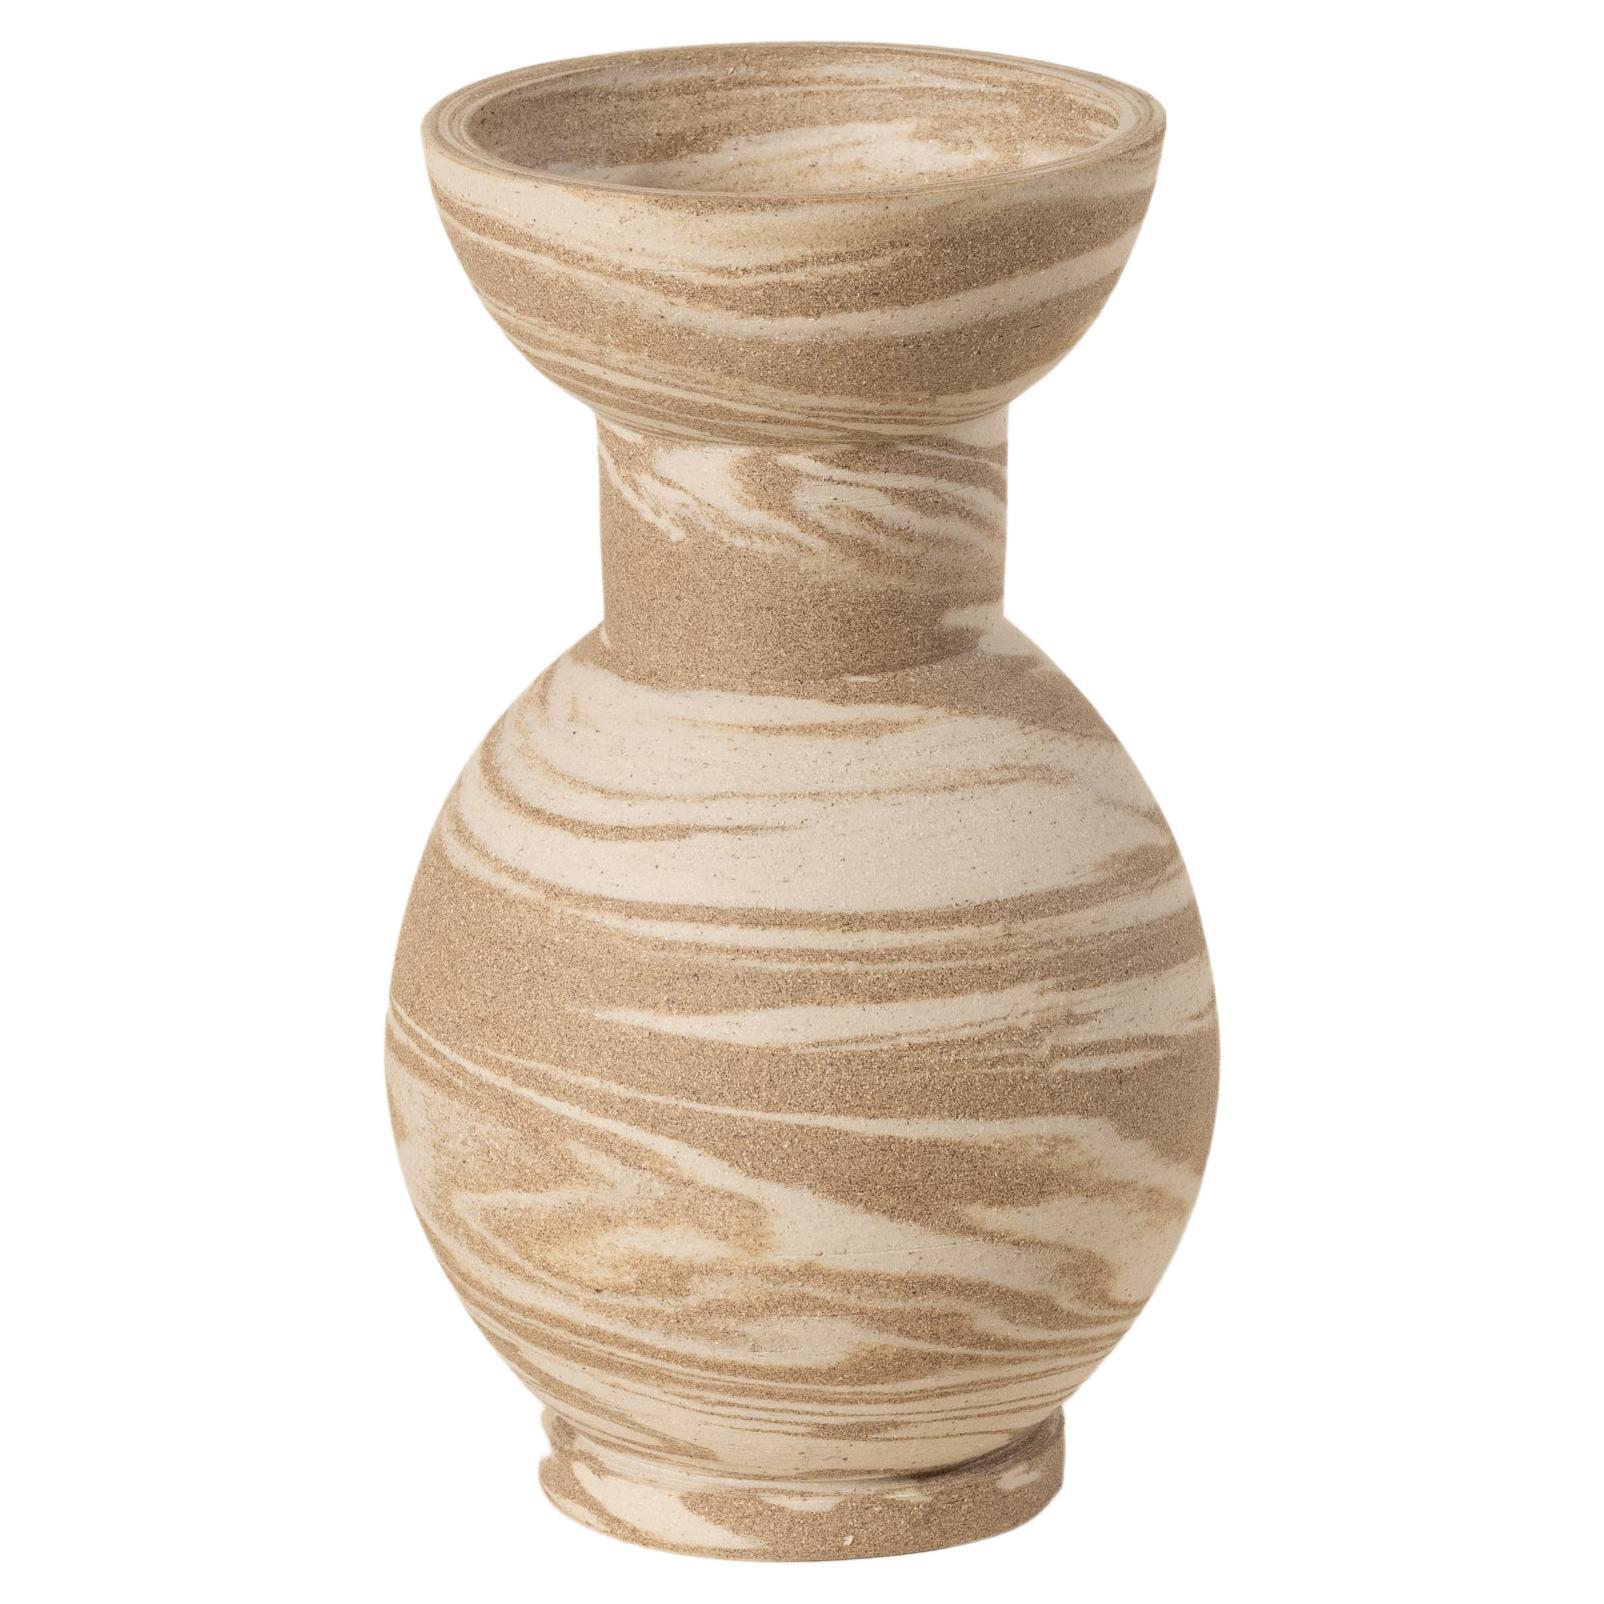 Arabesque vase